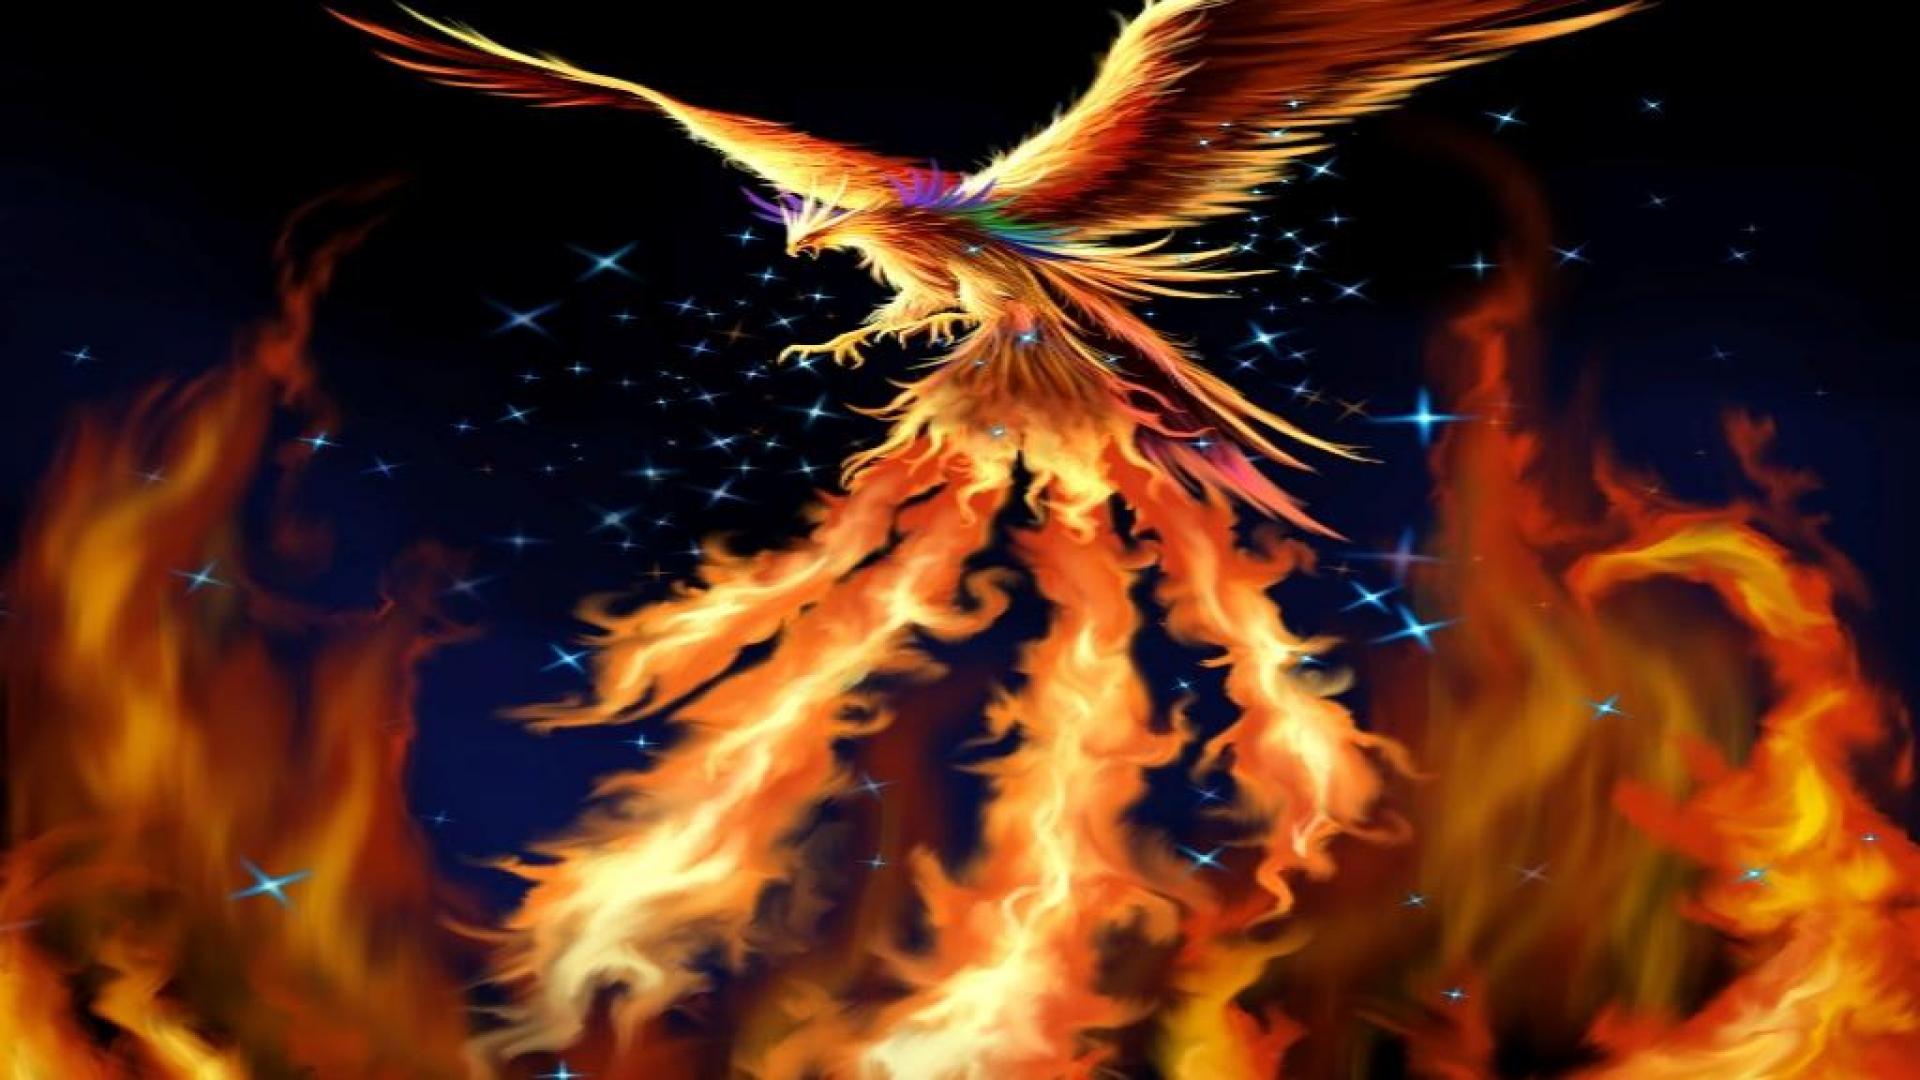 Phoenix Bird Wallpaper HD